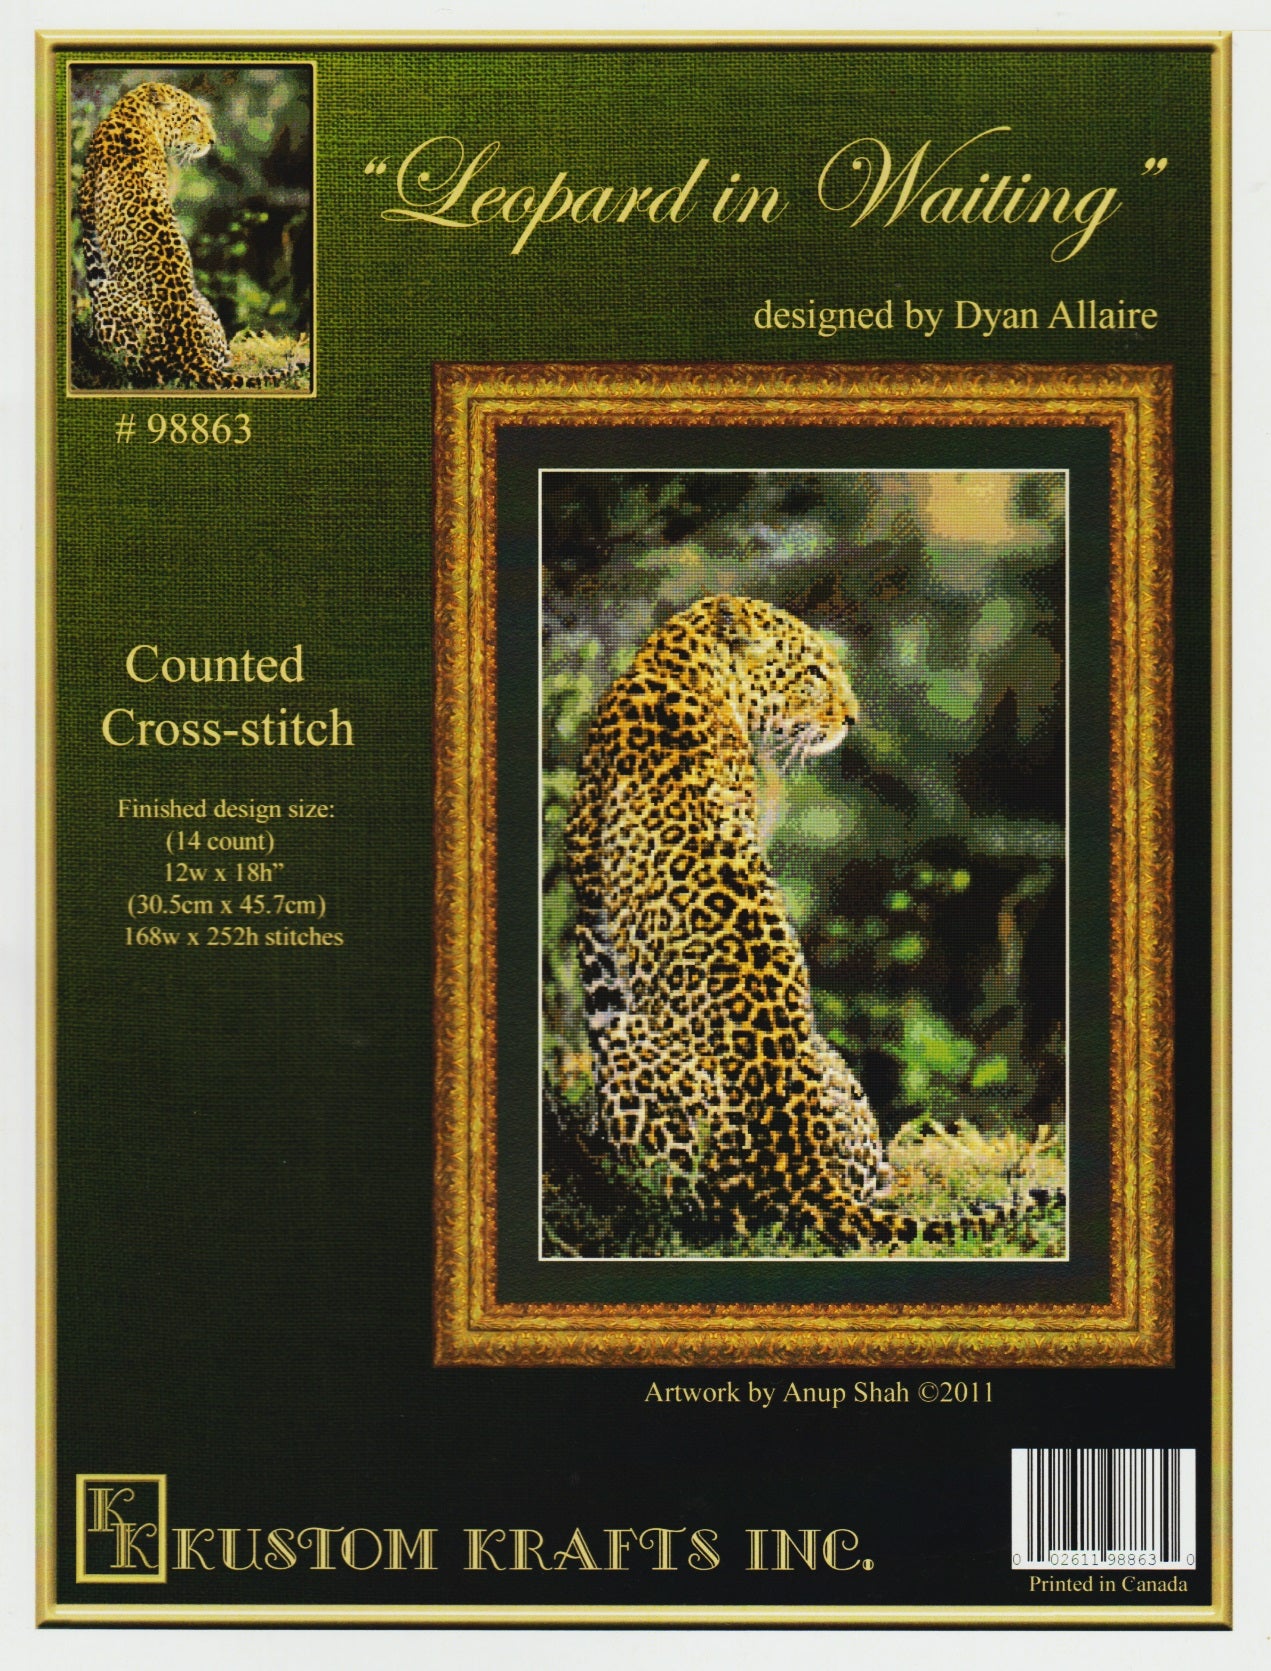 Kustom Krafts Leopard in Waiting 98863 cross stitch pattern